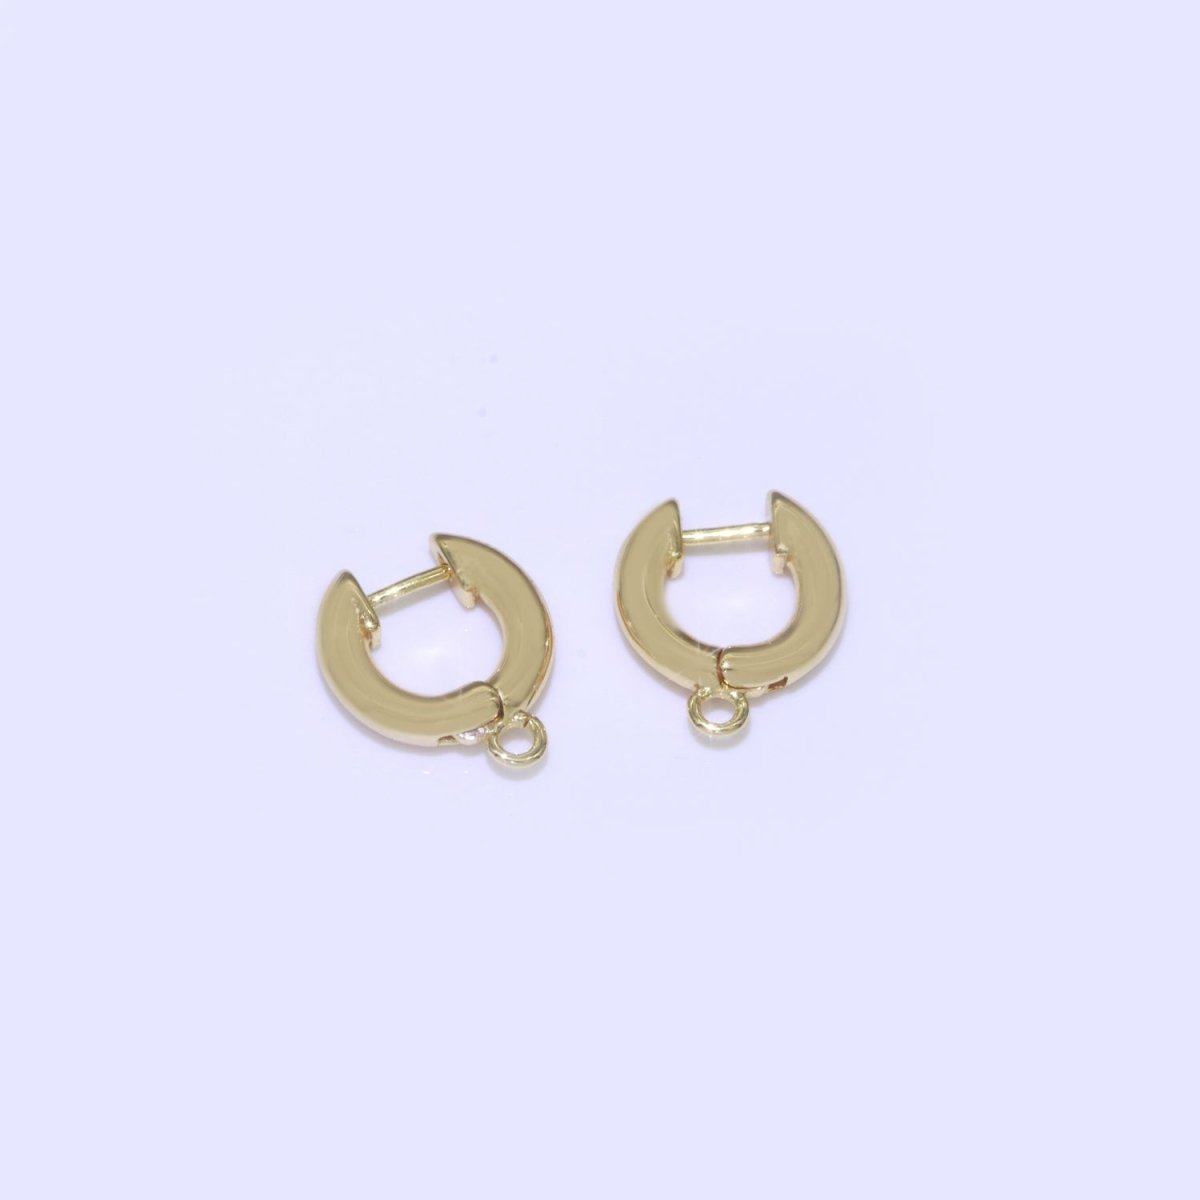 18k Gold Filled hoop huggie one touch w/ open link Lever Hoop earring making, 14x11.7 mm, Earring Charm Making Findings L-493 - DLUXCA